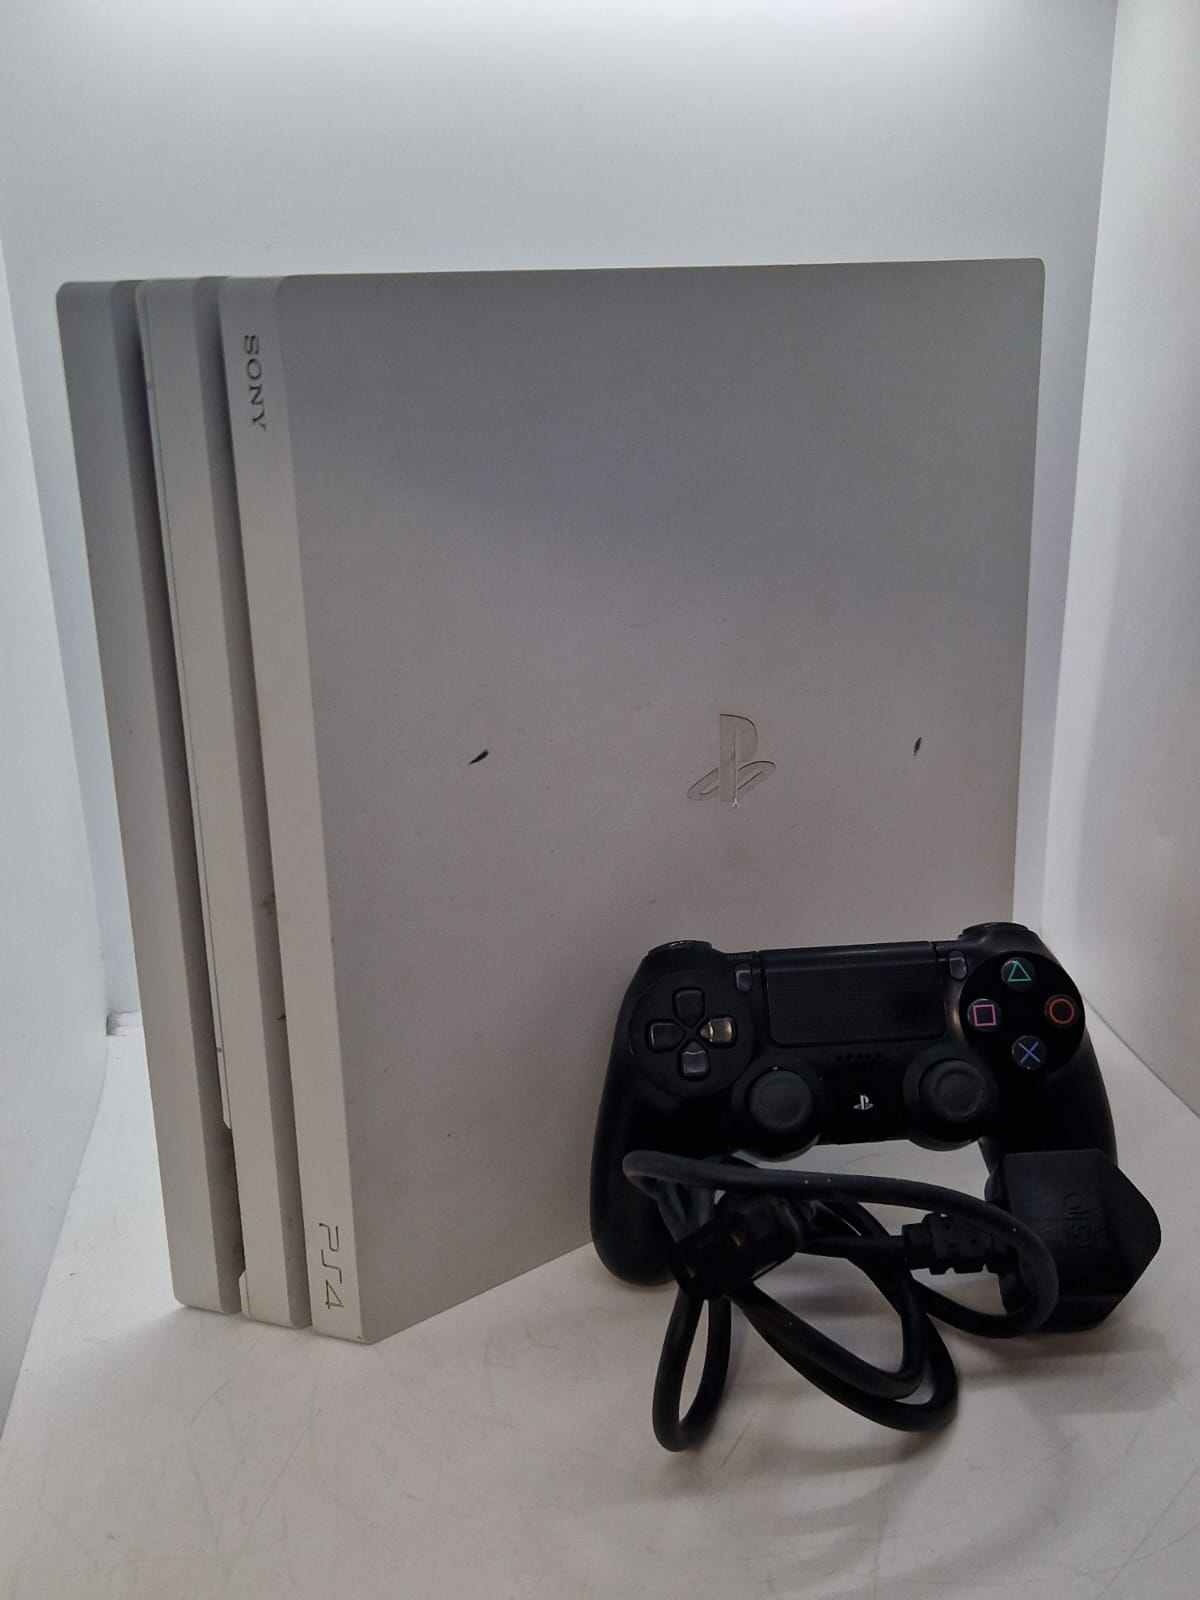 Sony PlayStation 4 Pro White 1TB Console - White No box